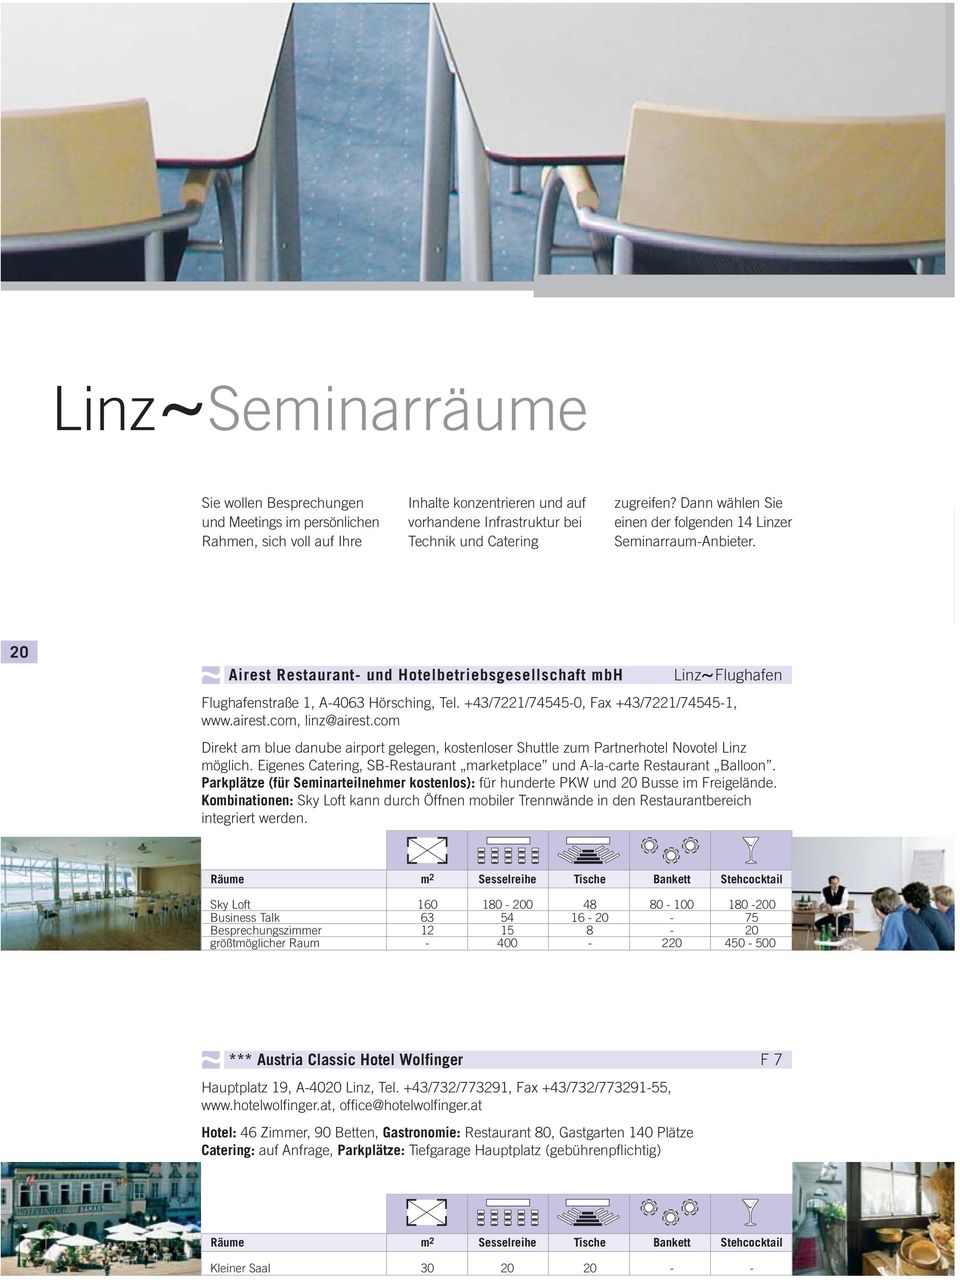 +43/7221/74545-0, Fax +43/7221/74545-1, www.airest.com, linz@airest.com Direkt am blue danube airport gelegen, kostenloser Shuttle zum Partnerhotel Novotel Linz möglich.